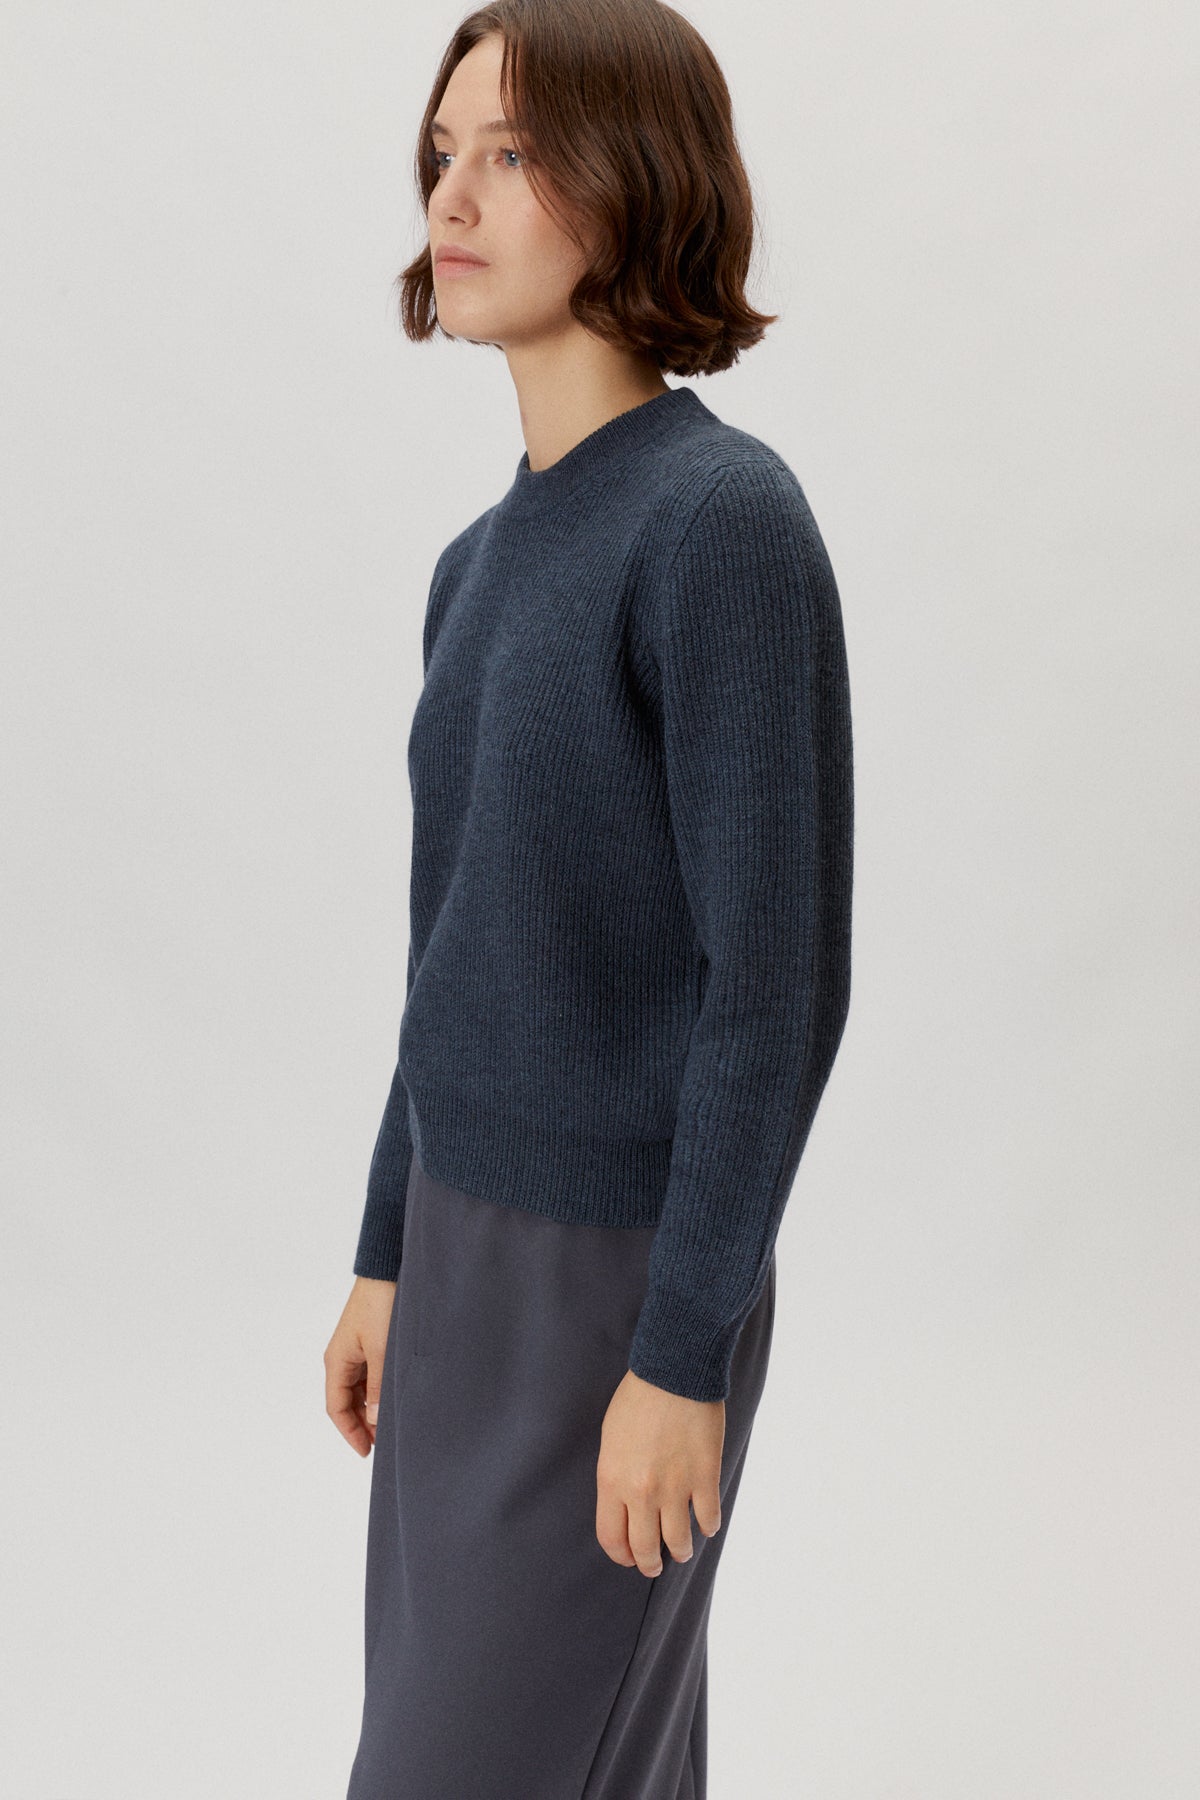 Indigo Blue | The Natural Dye Sweater